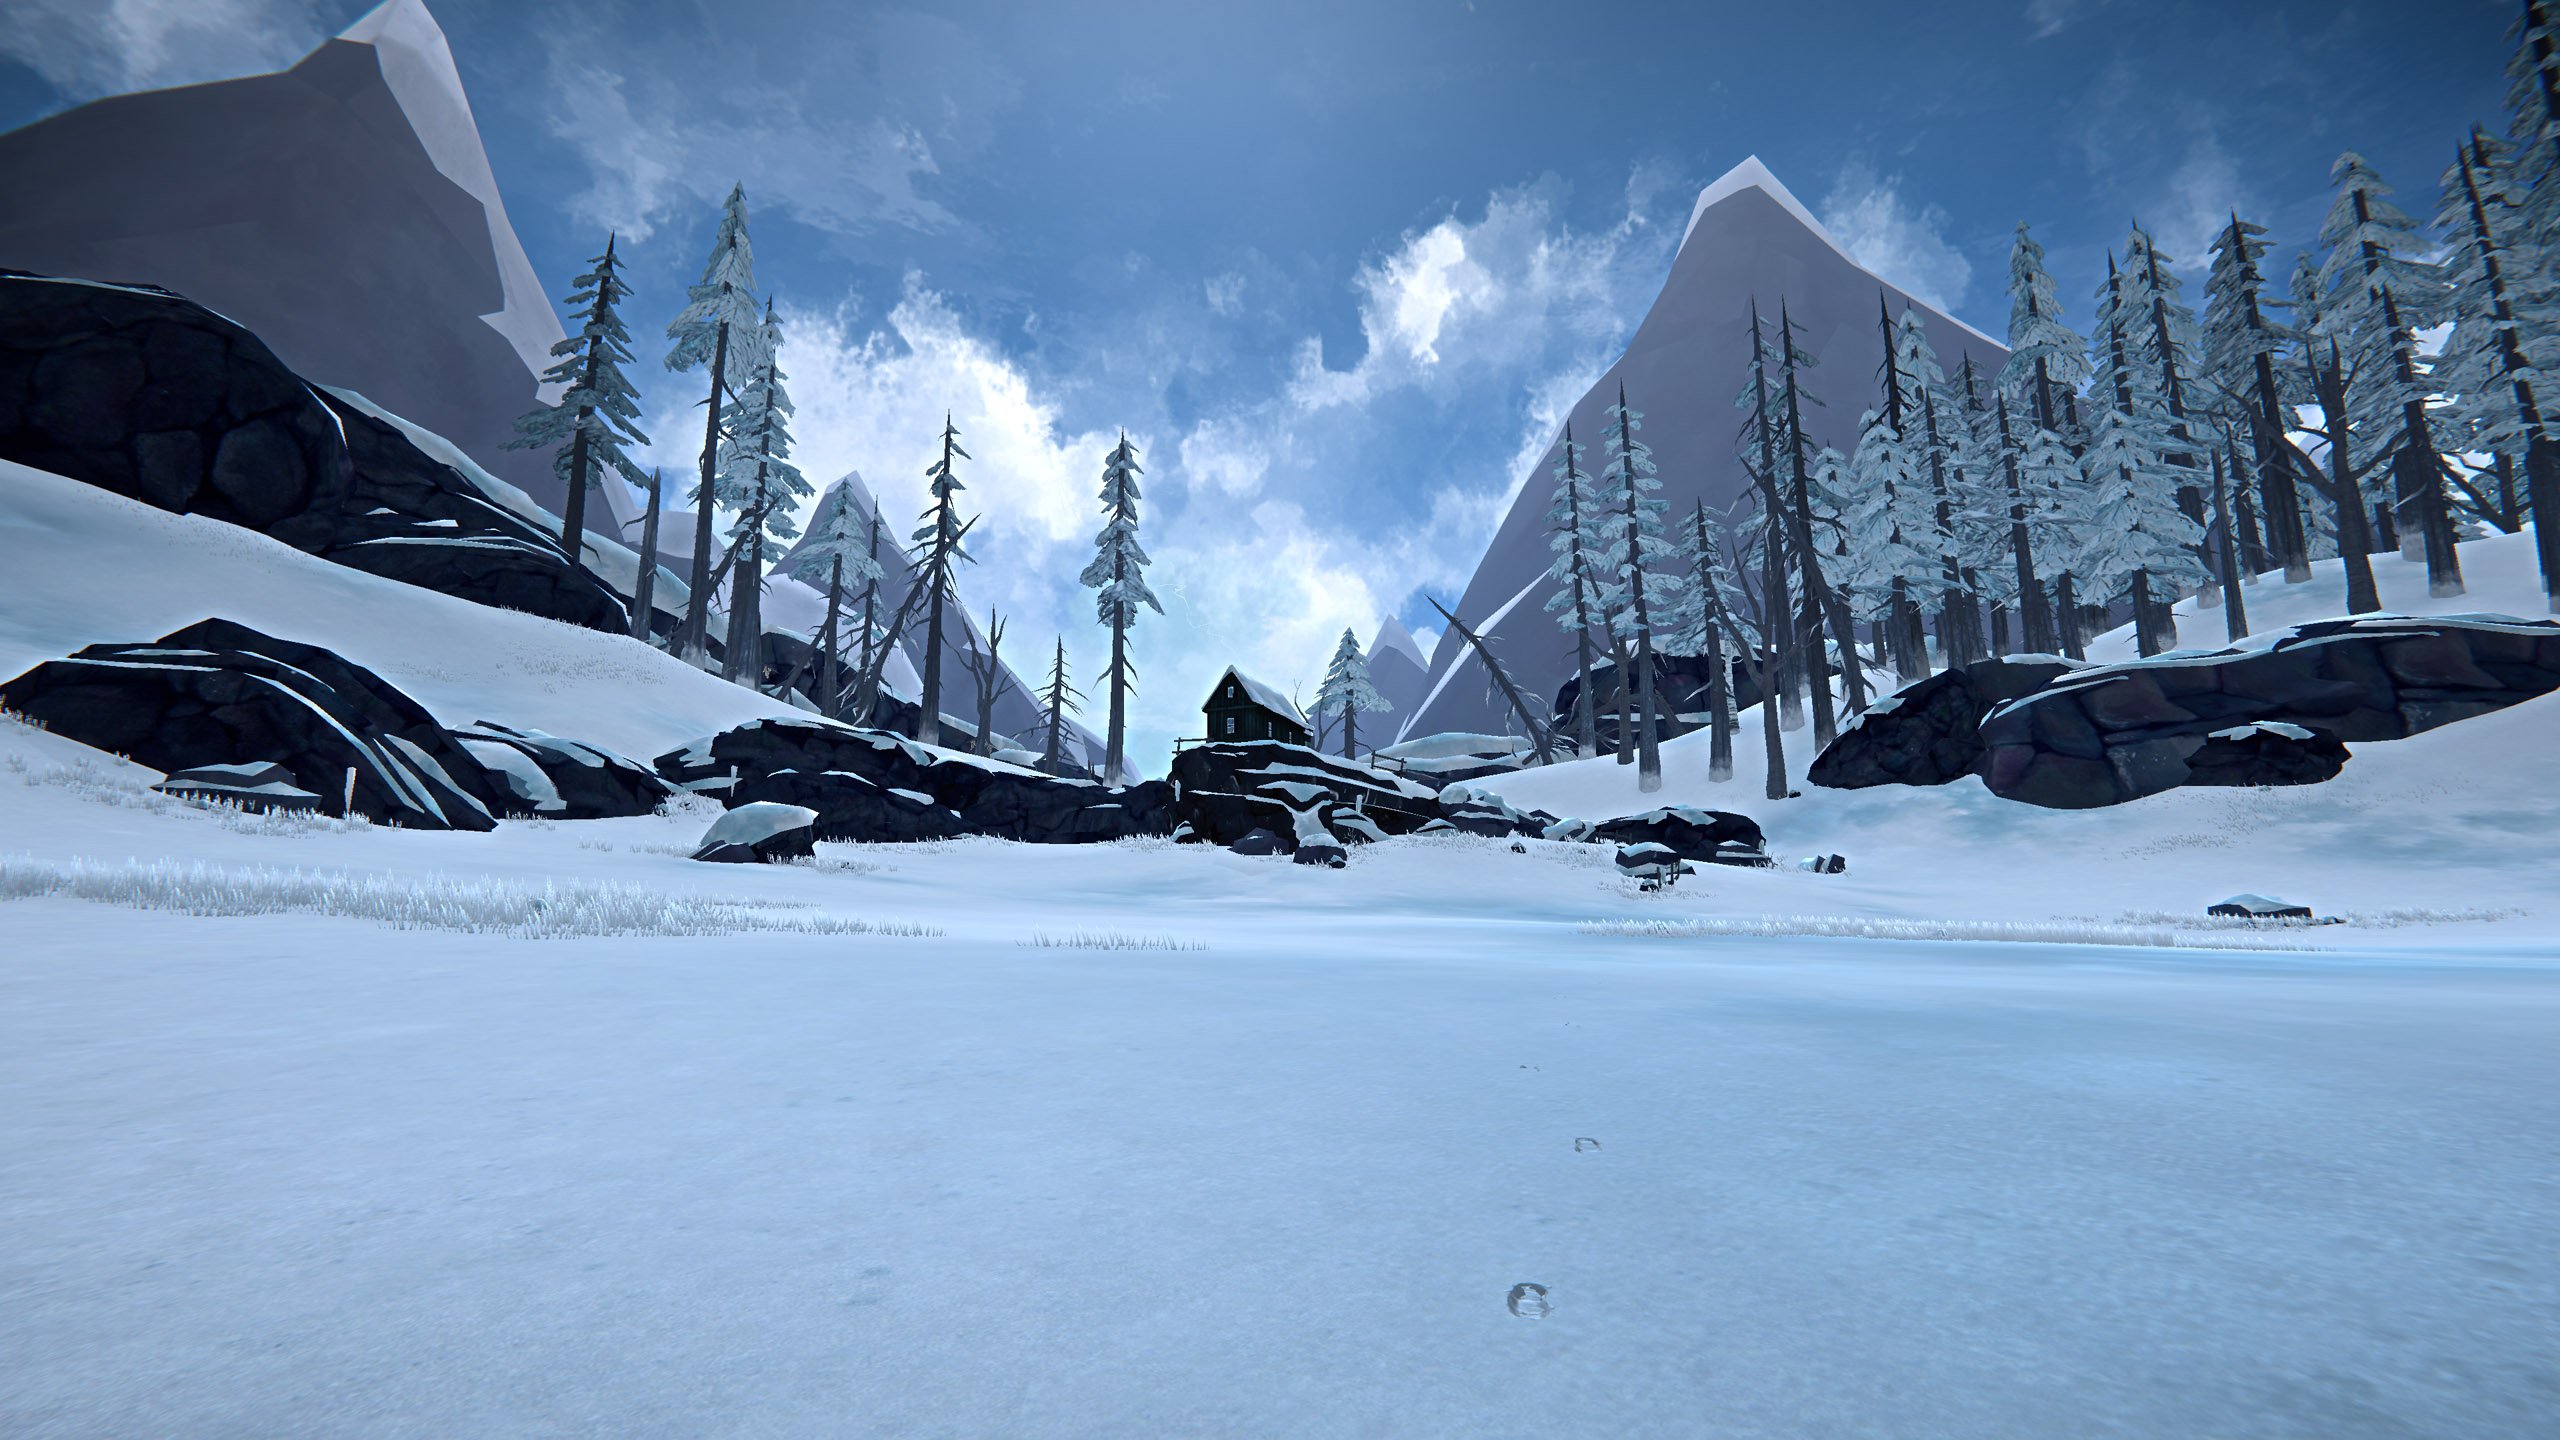 Fortnite Cinematic Background Snow - 2560x1440 Wallpaper 